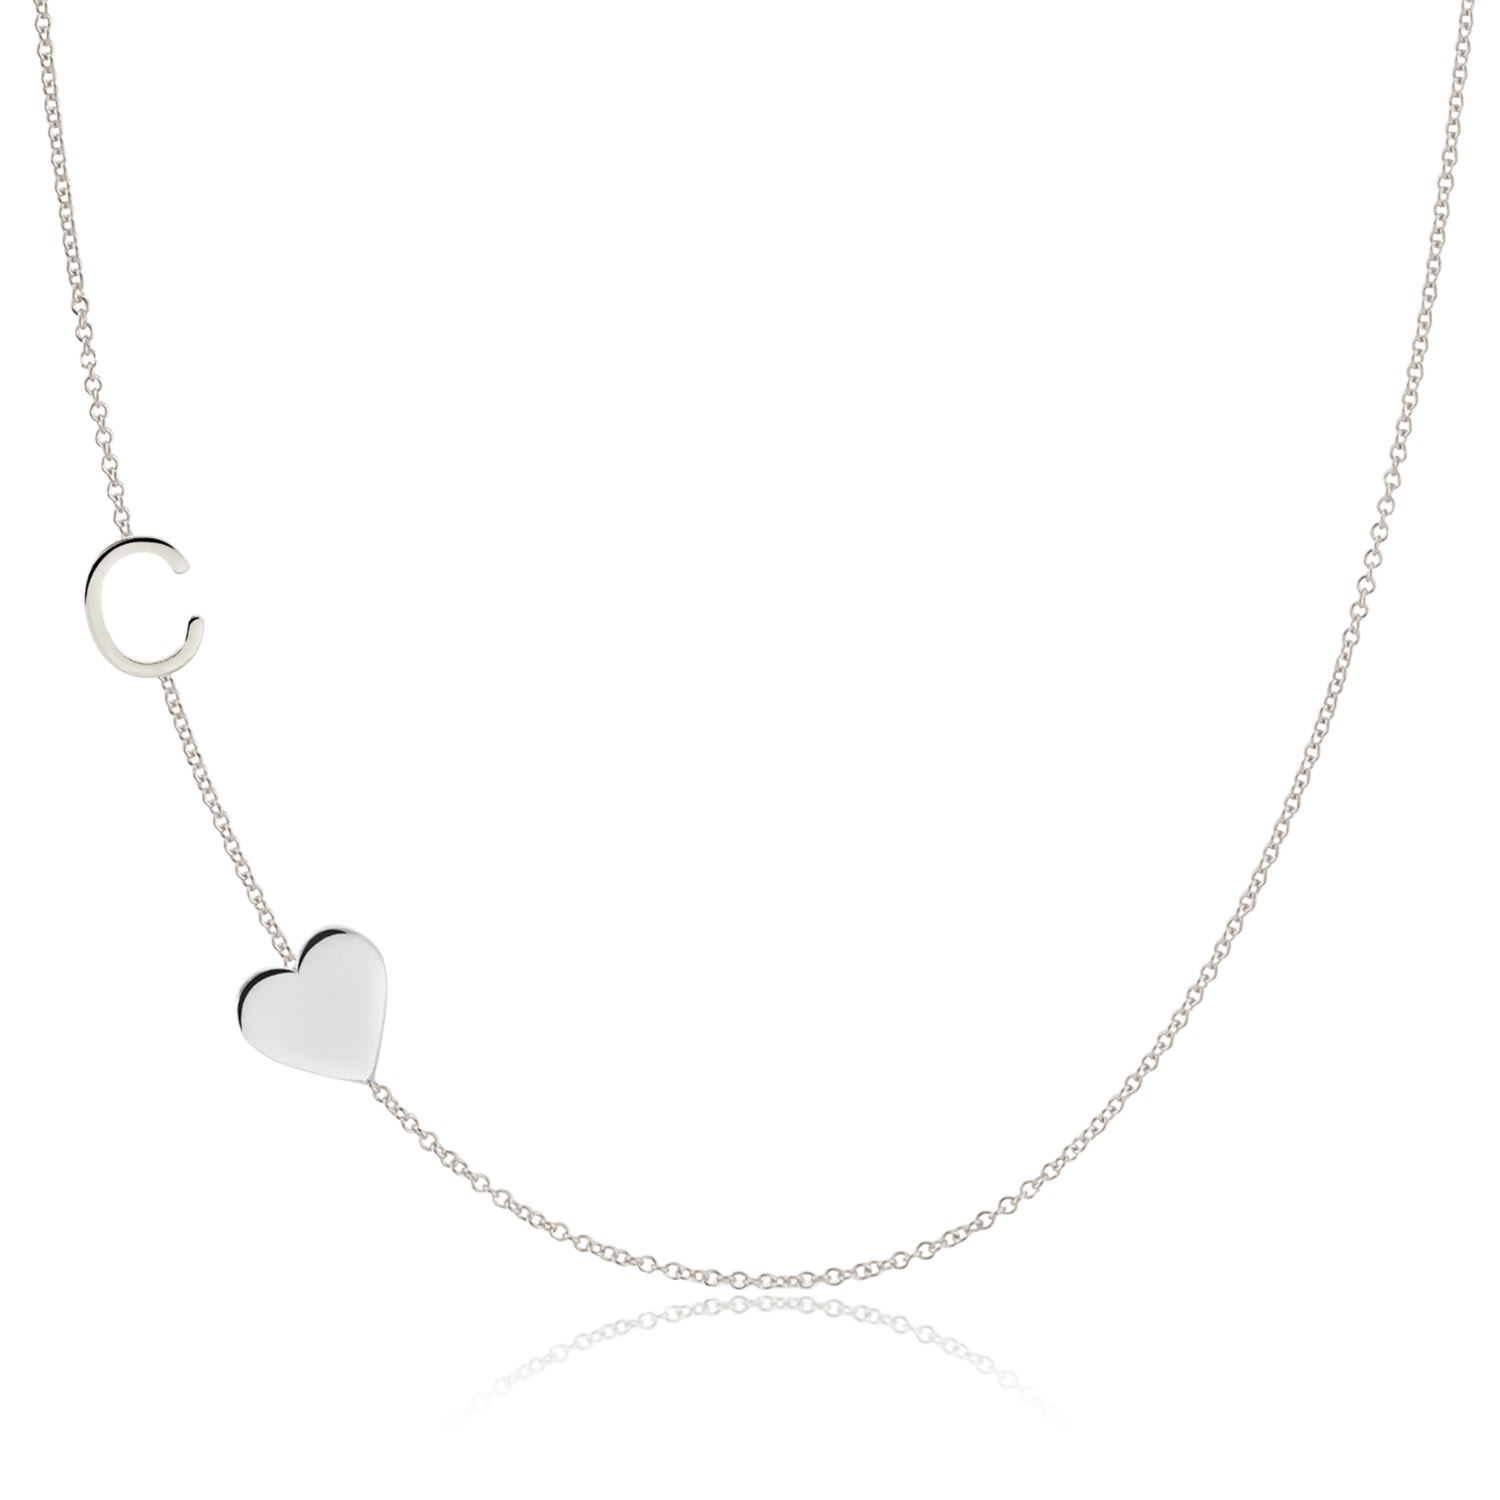 Maya Brenner Women's Monogram Necklace With Heart 14k White Gold - 16"